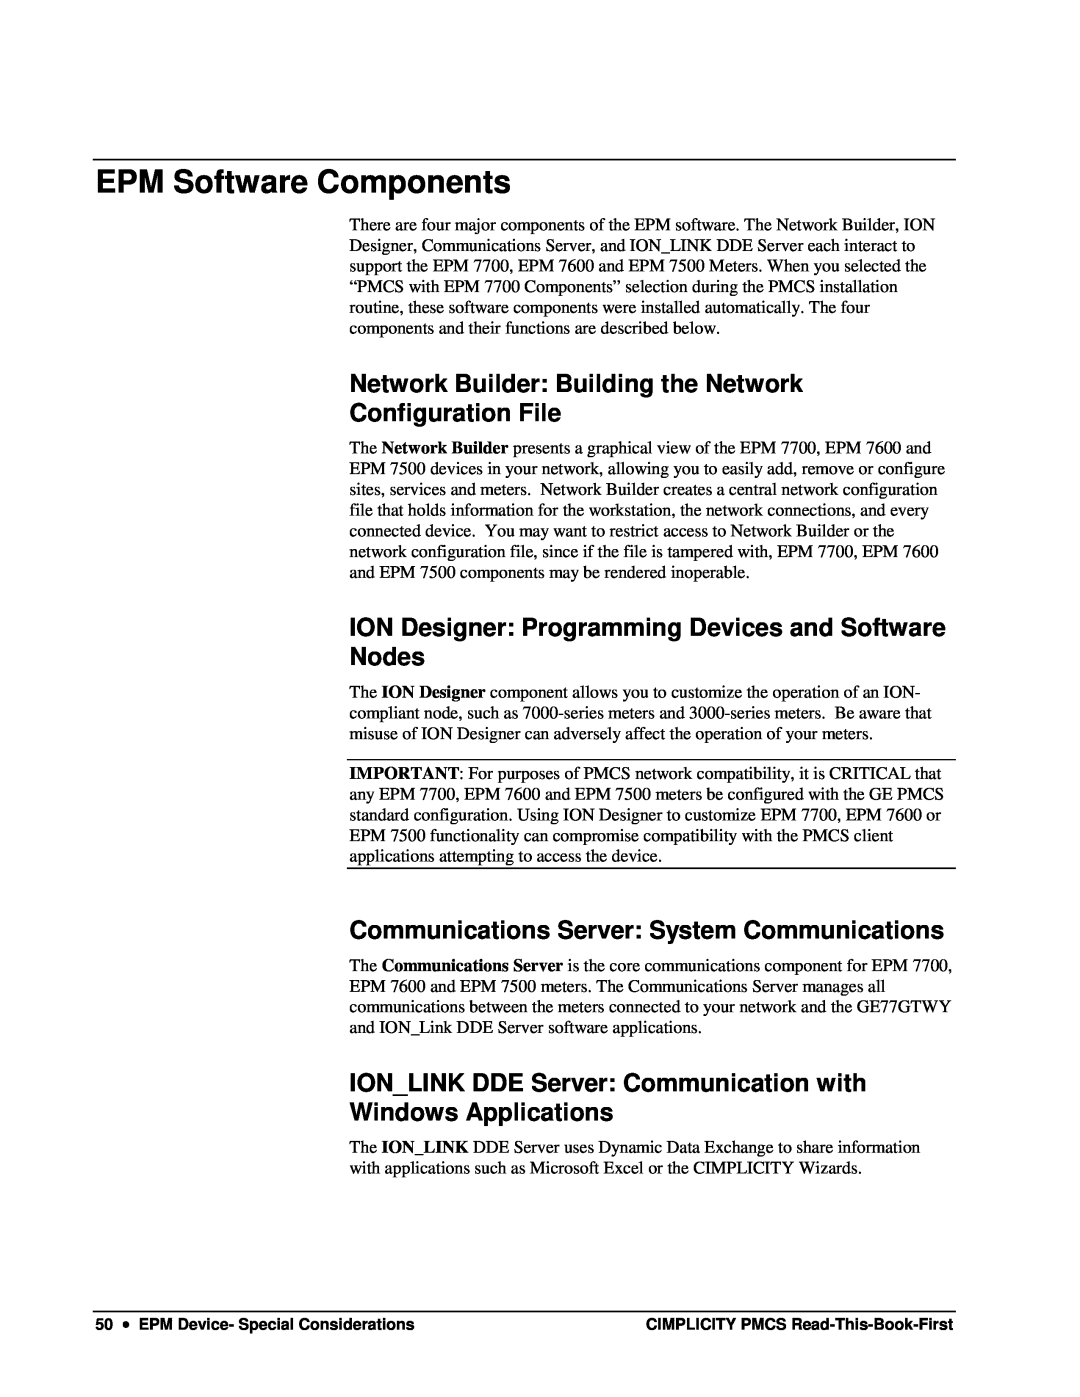 GE DEH-211 EPM Software Components, Network Builder Building the Network, Configuration File, Nodes, Windows Applications 